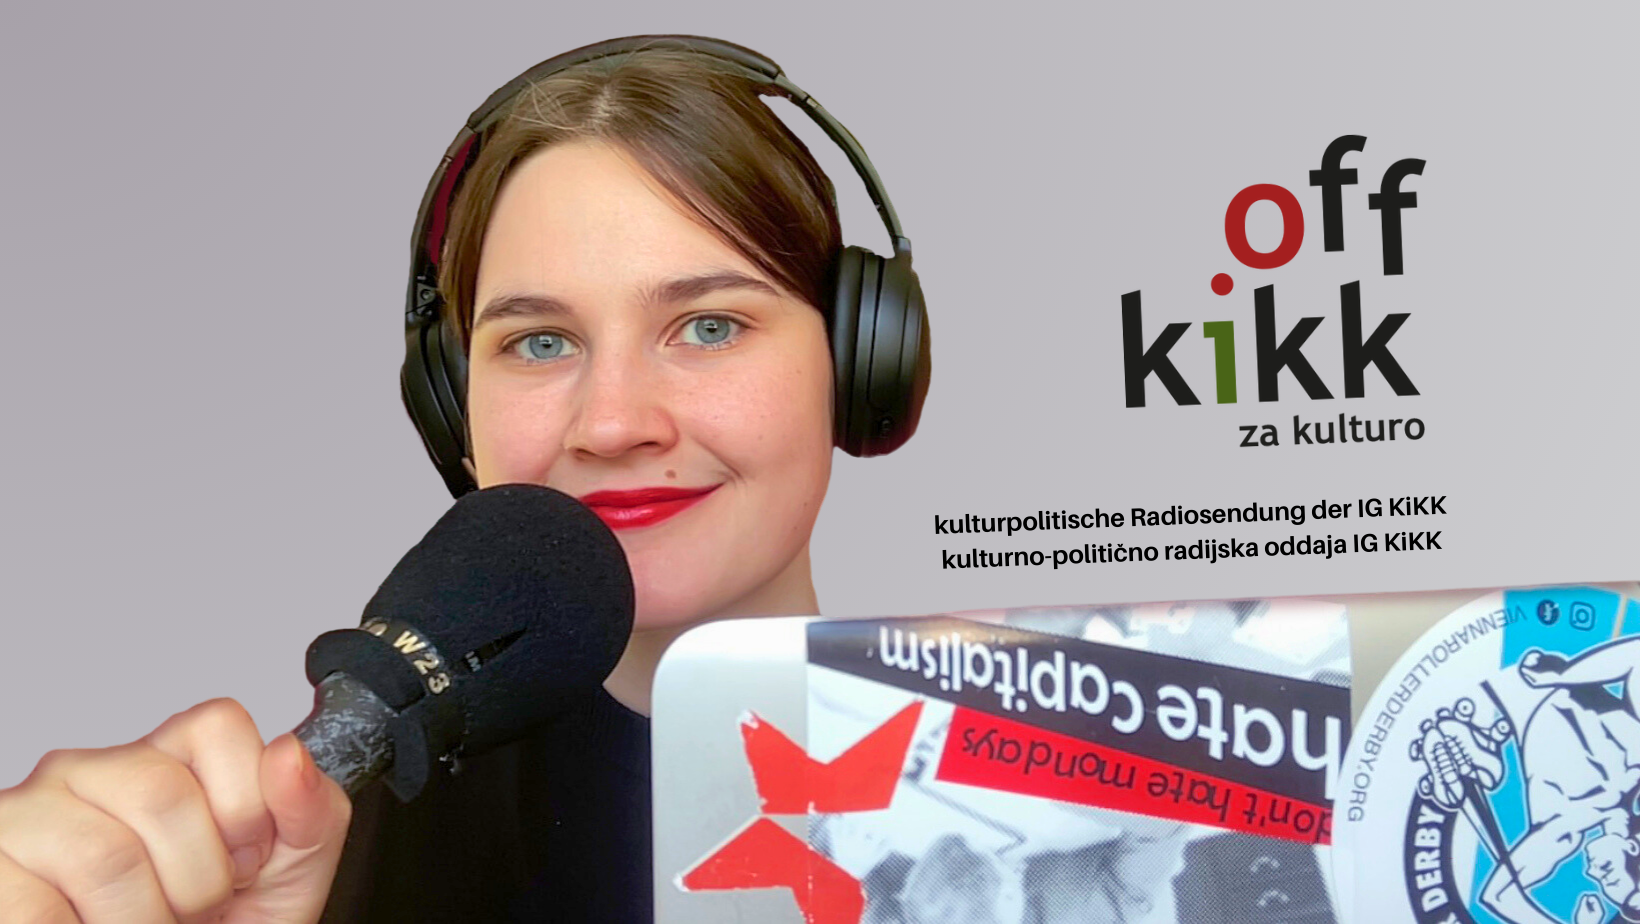 Die kulturpolitische Radiosendung der IG KiKK mit Ana Grilc | Kulturno politischno radijska oddaja